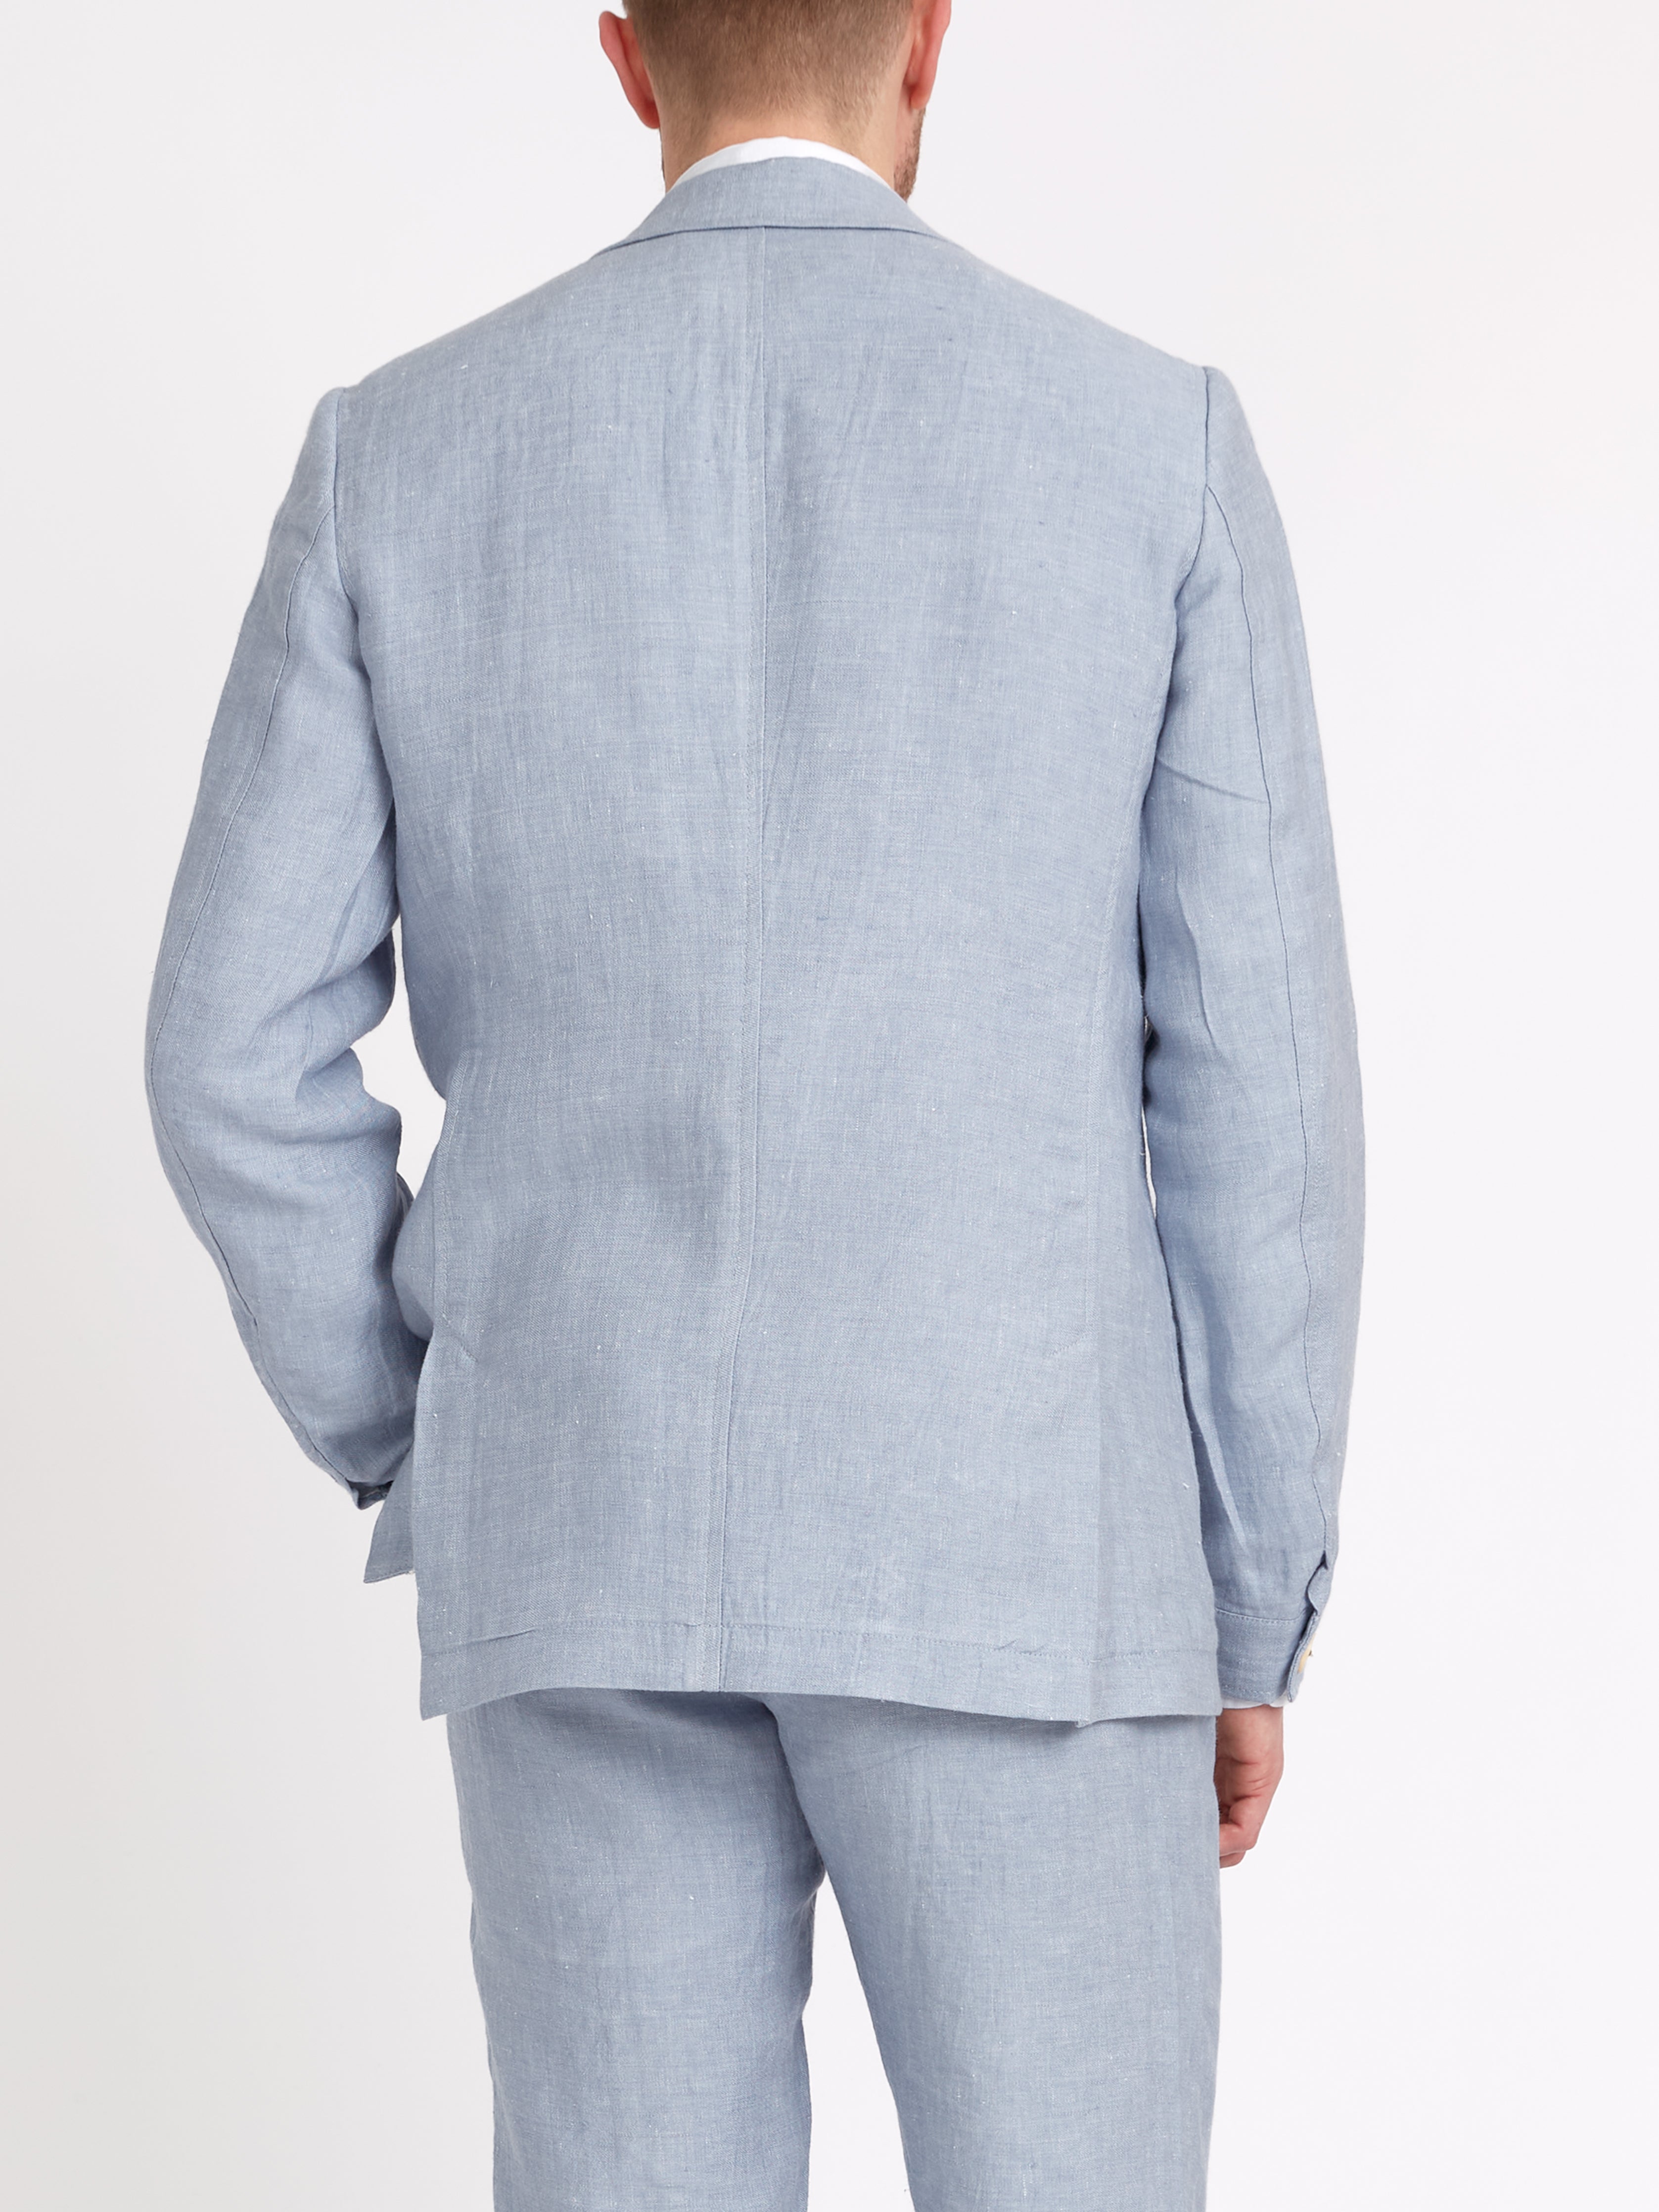 Blue Drescher Wyndhams Suit